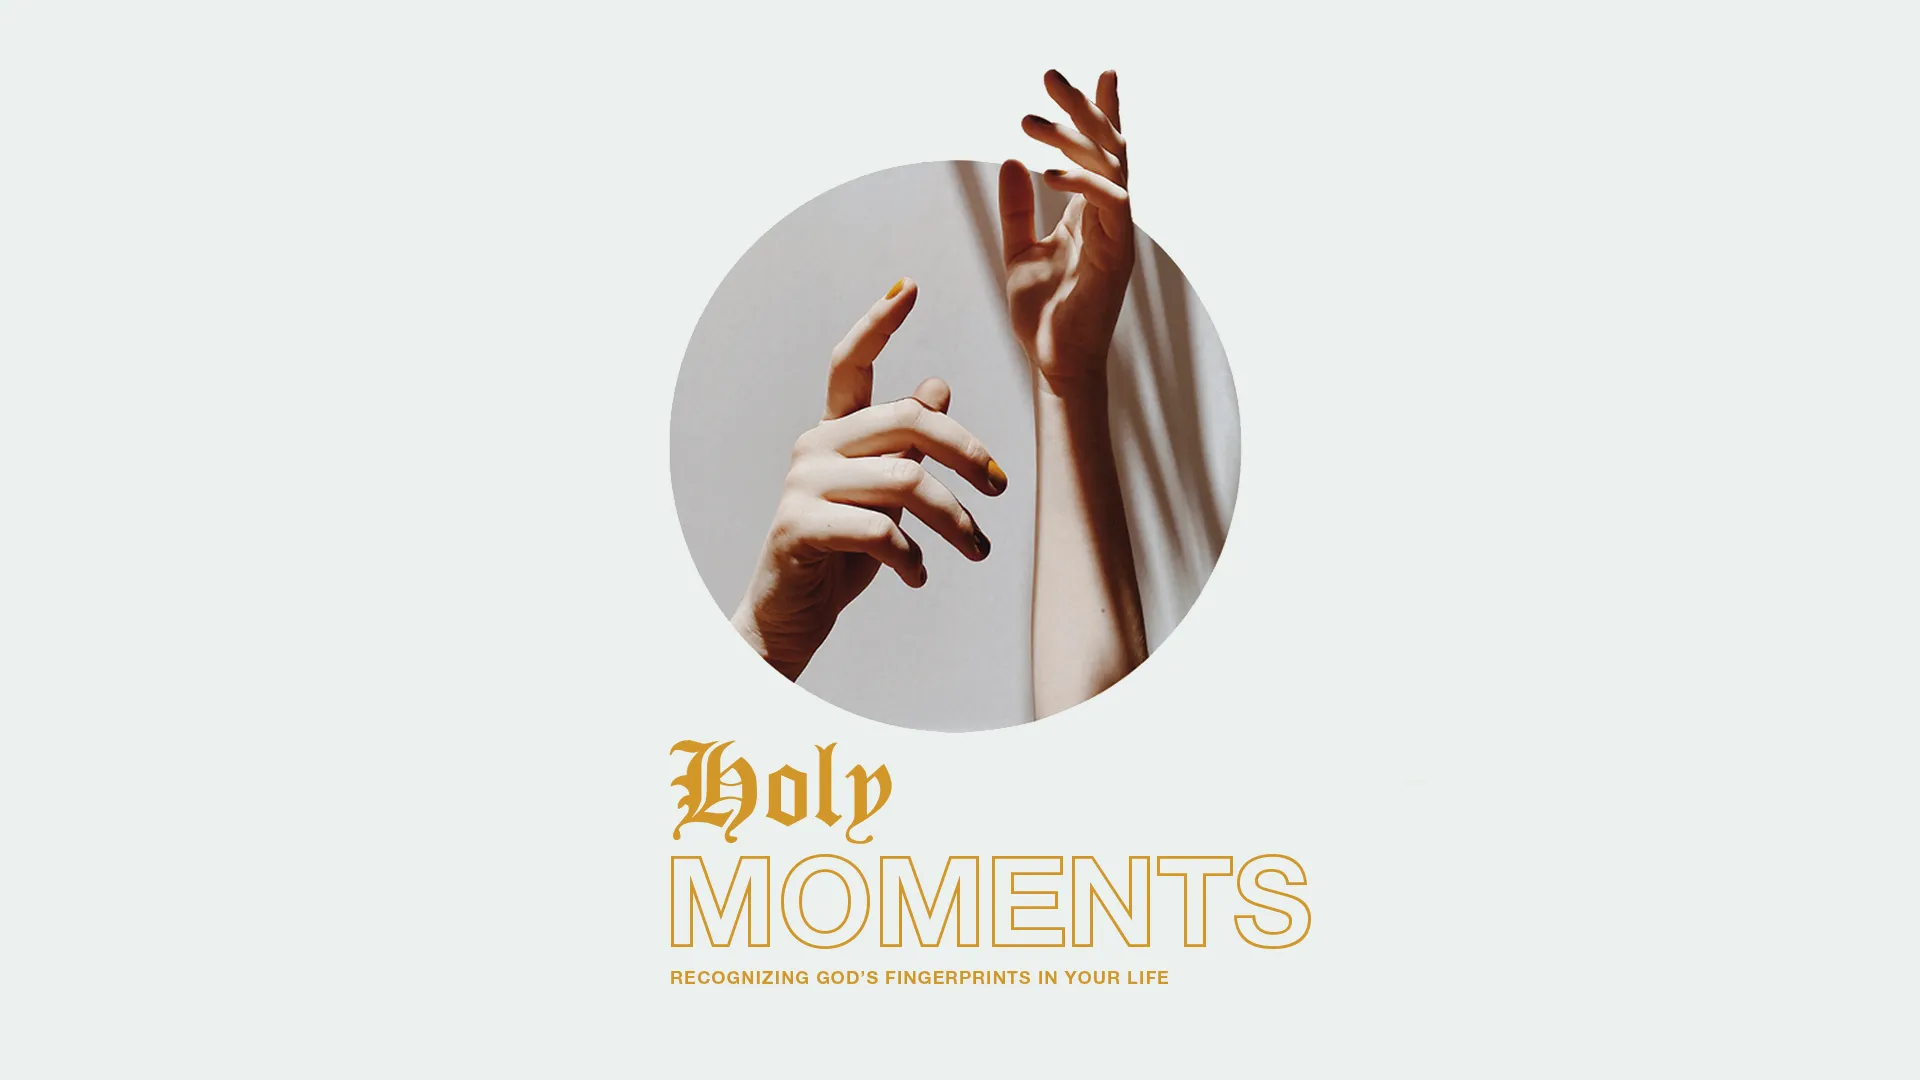 Sheologie, Holy Moments 2020